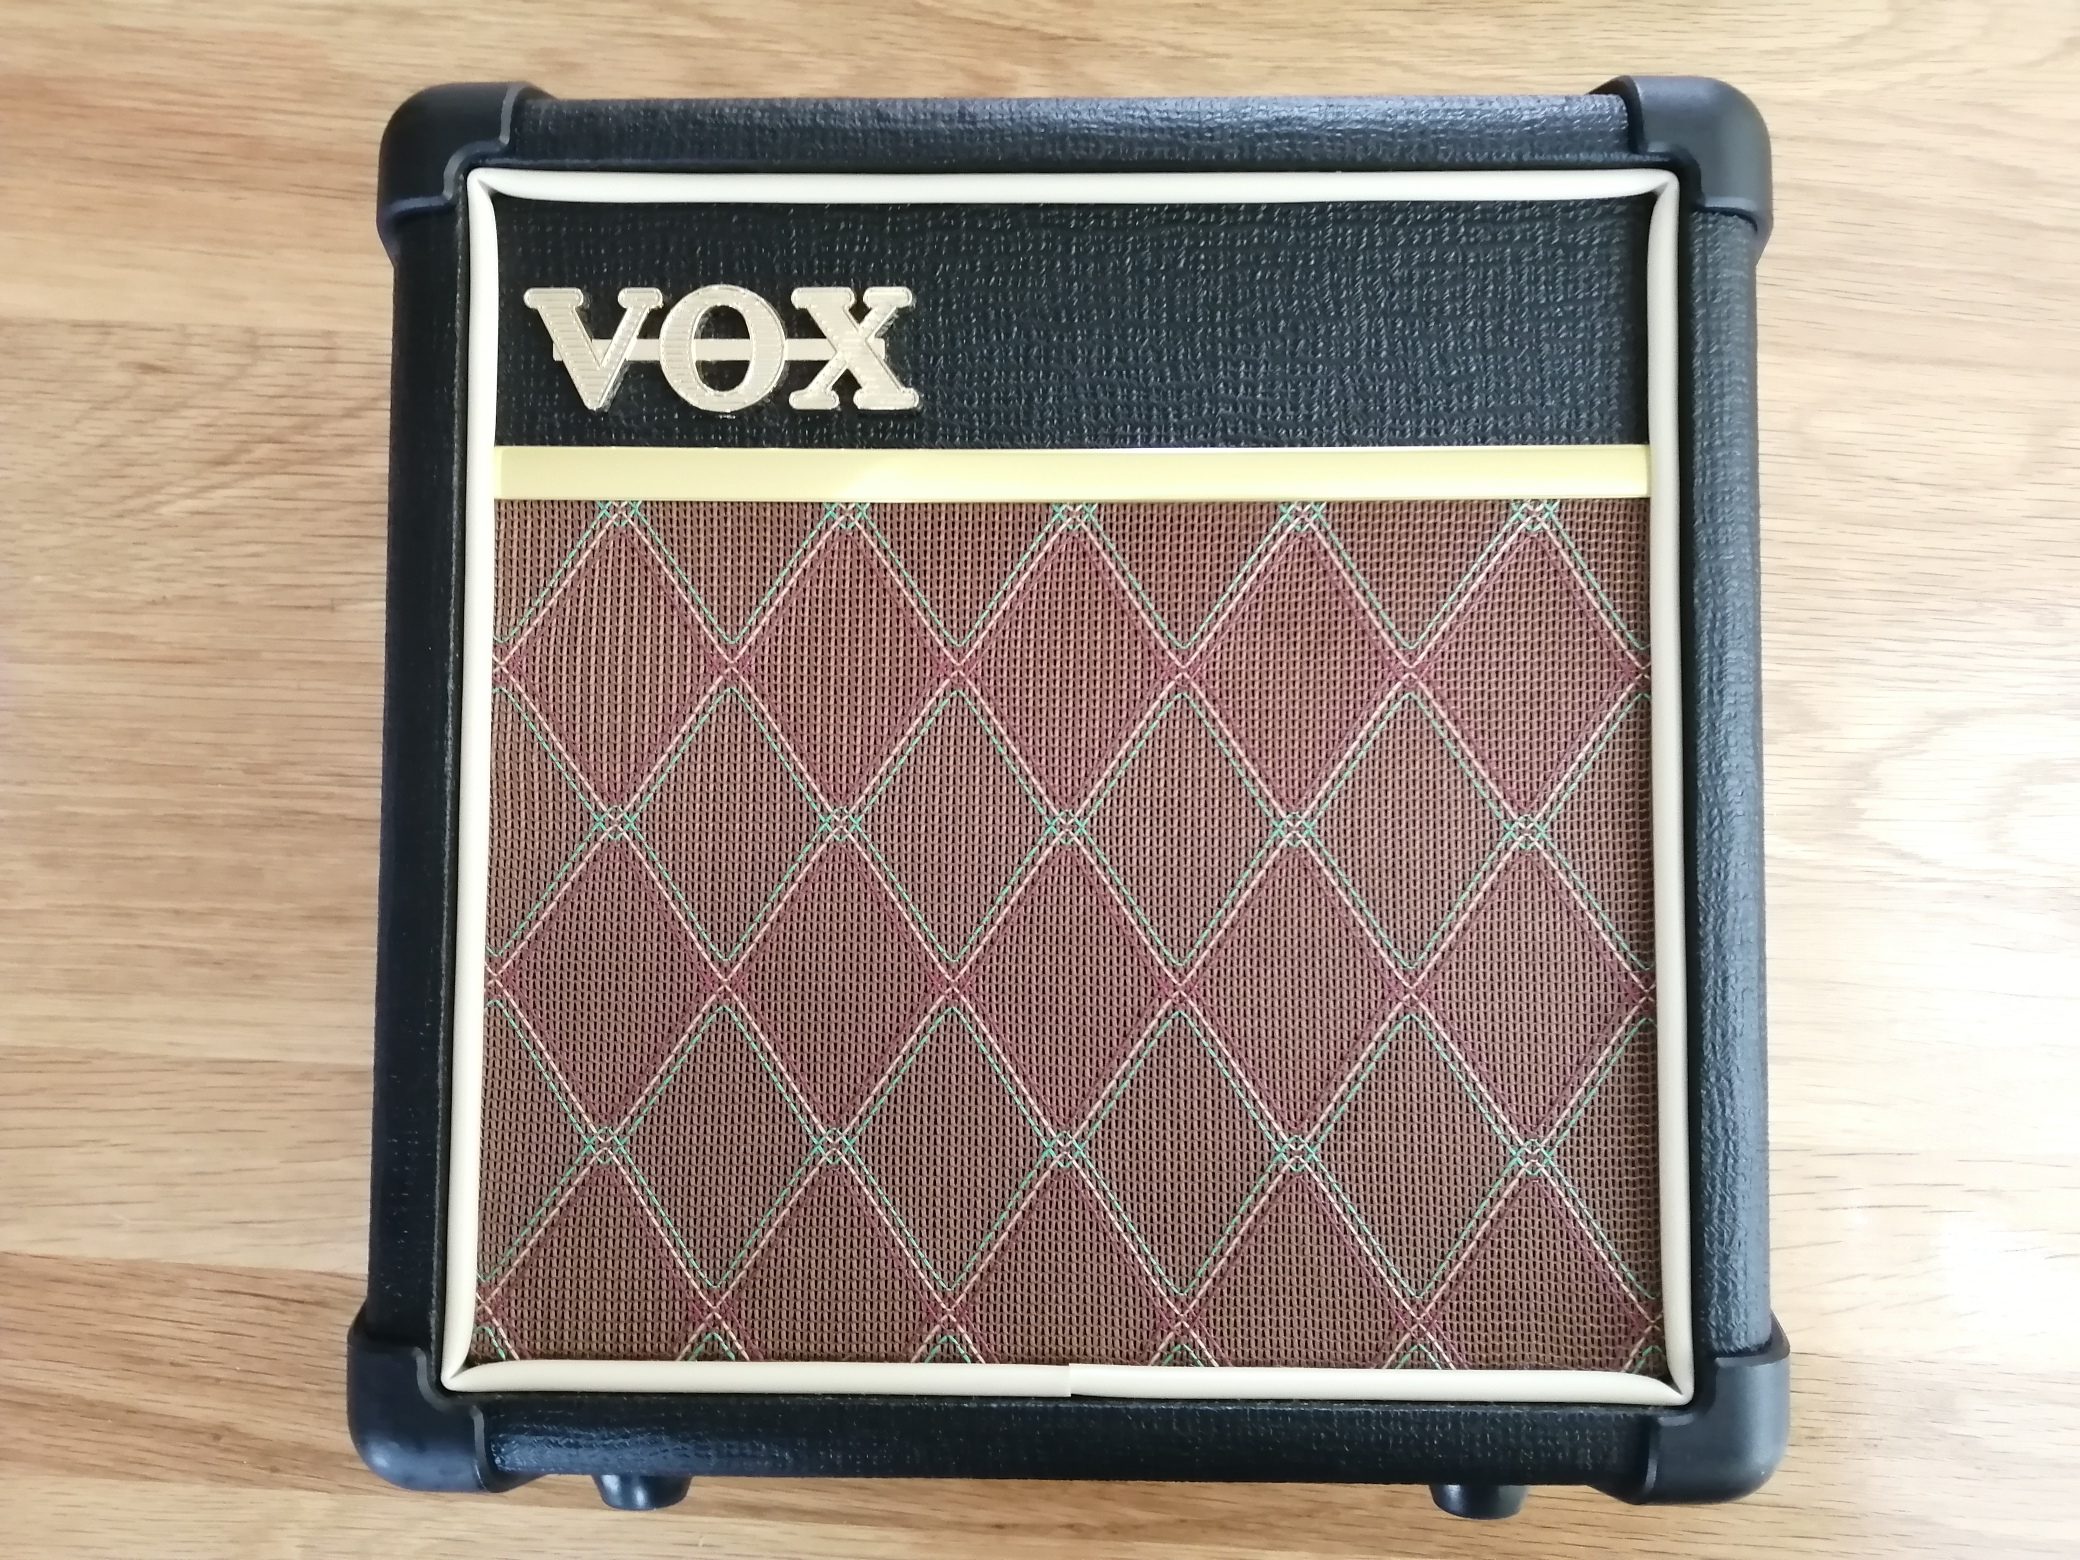 VOX MINI5 Rhythmギターアンプのレビュー。リズム機能付き - ロックな 